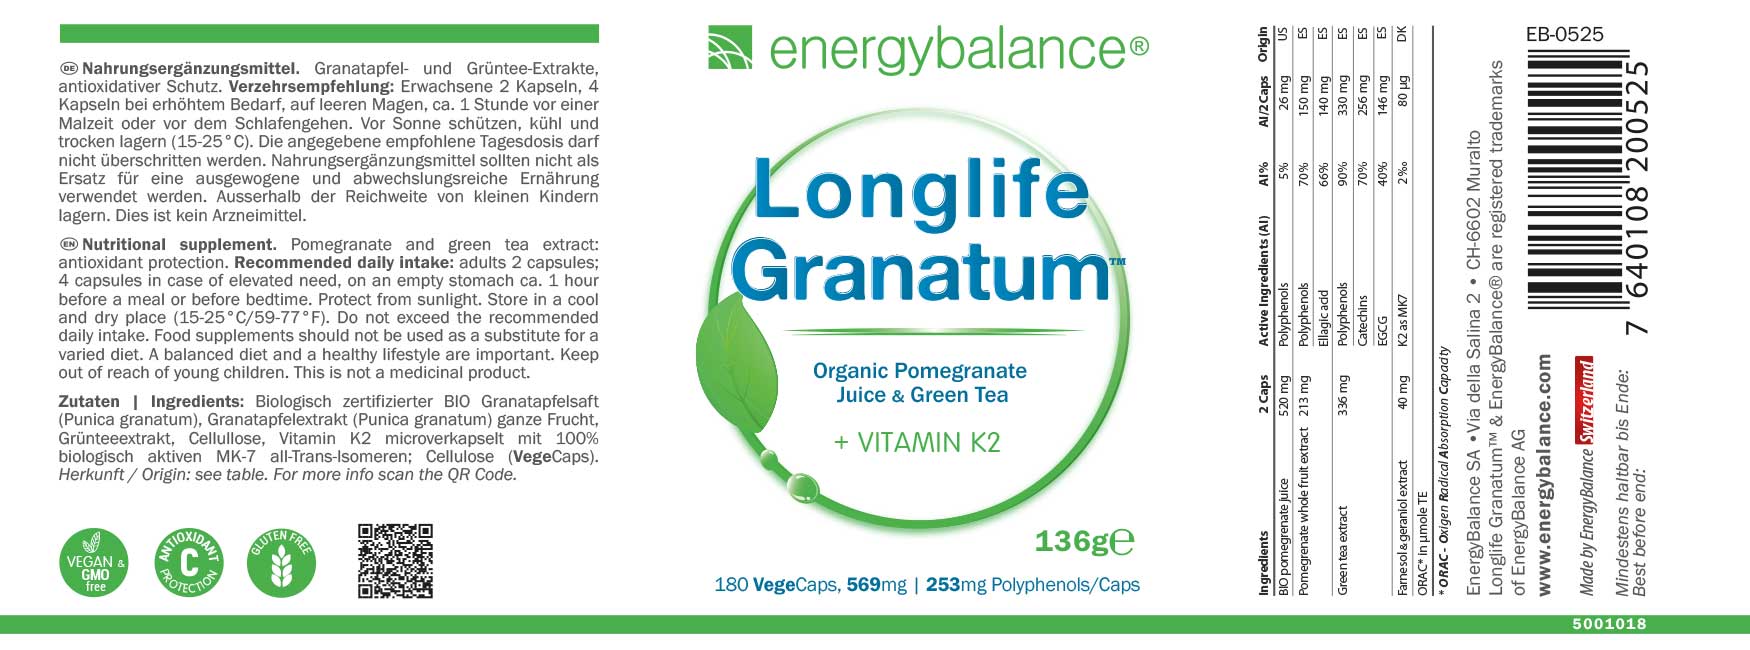 Longlife Granatum Etikett von Energybalance